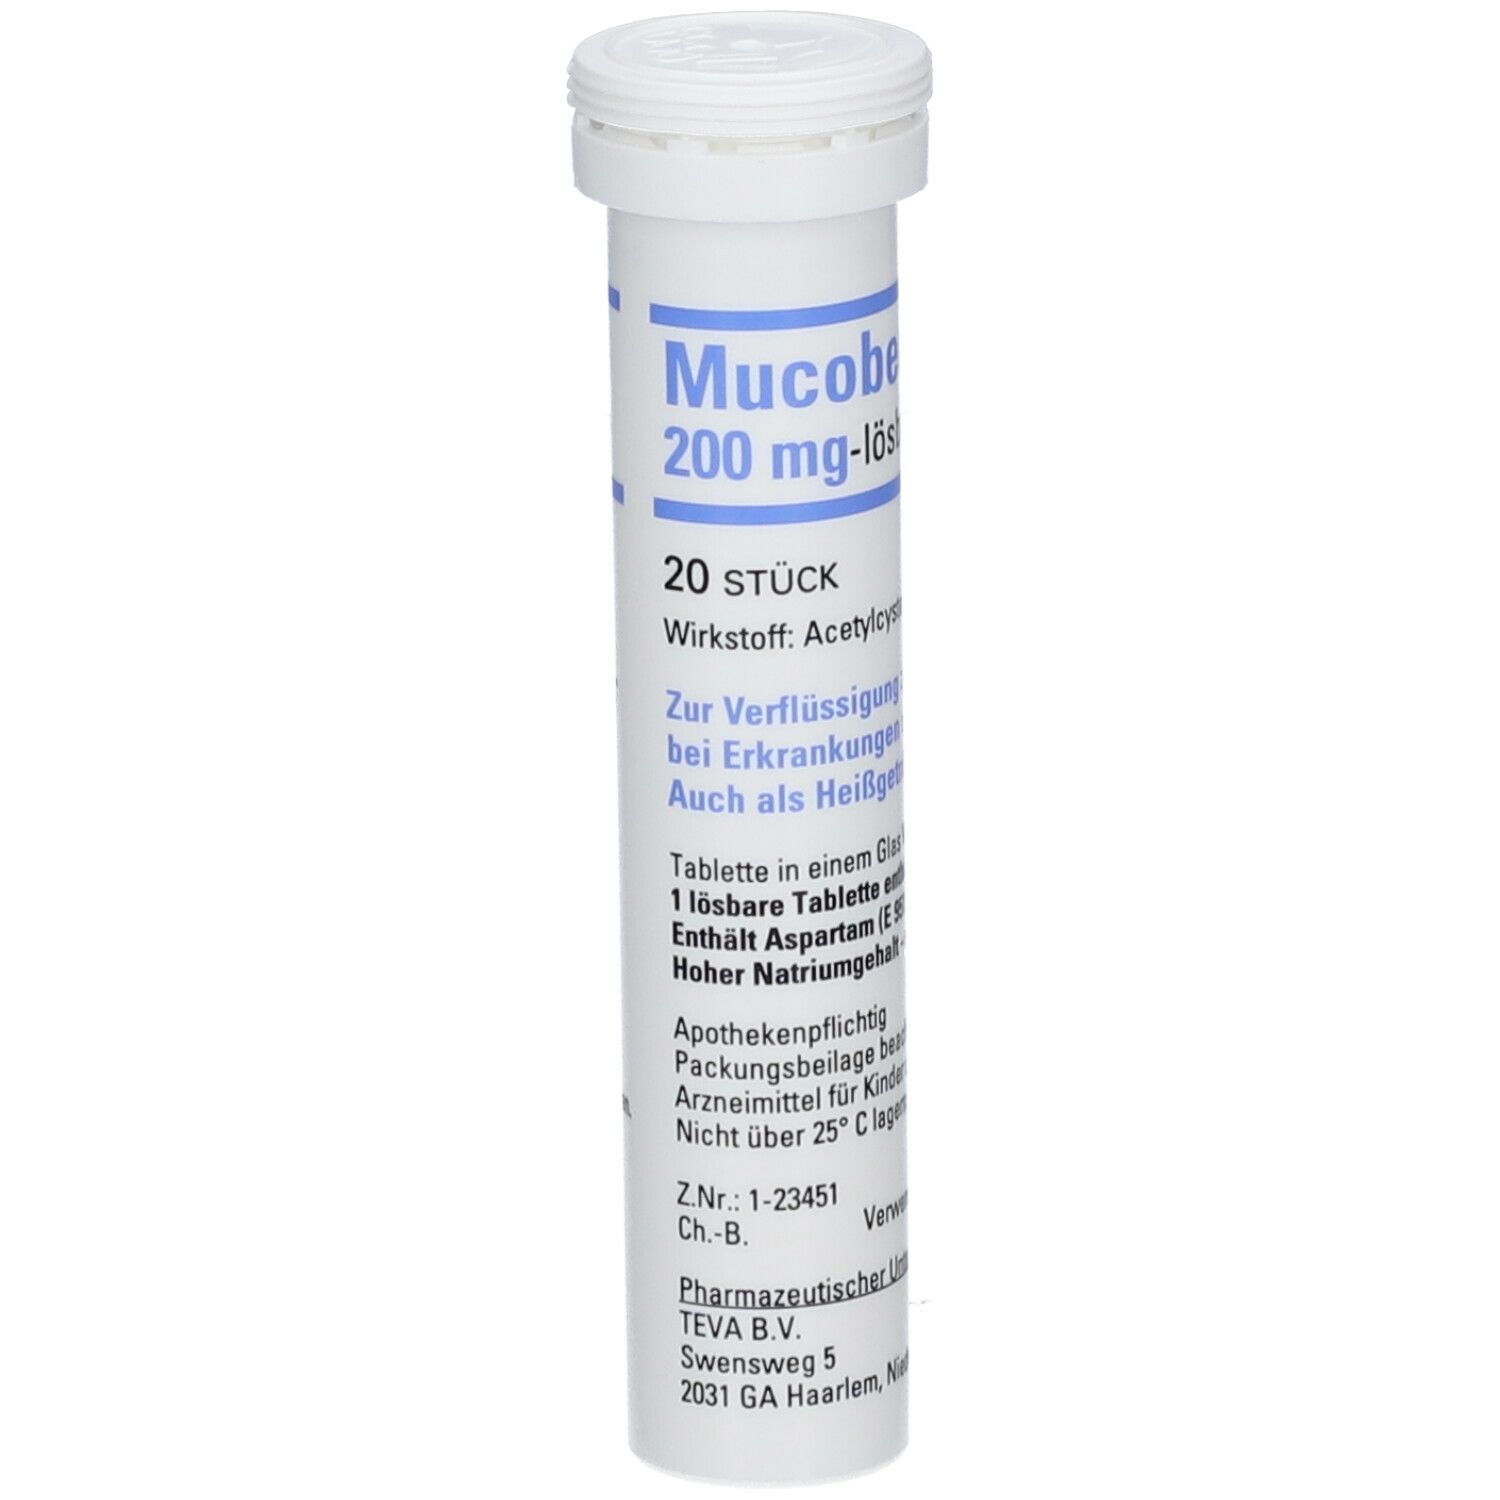 Mucobene® 200 mg lösbare Tabletten